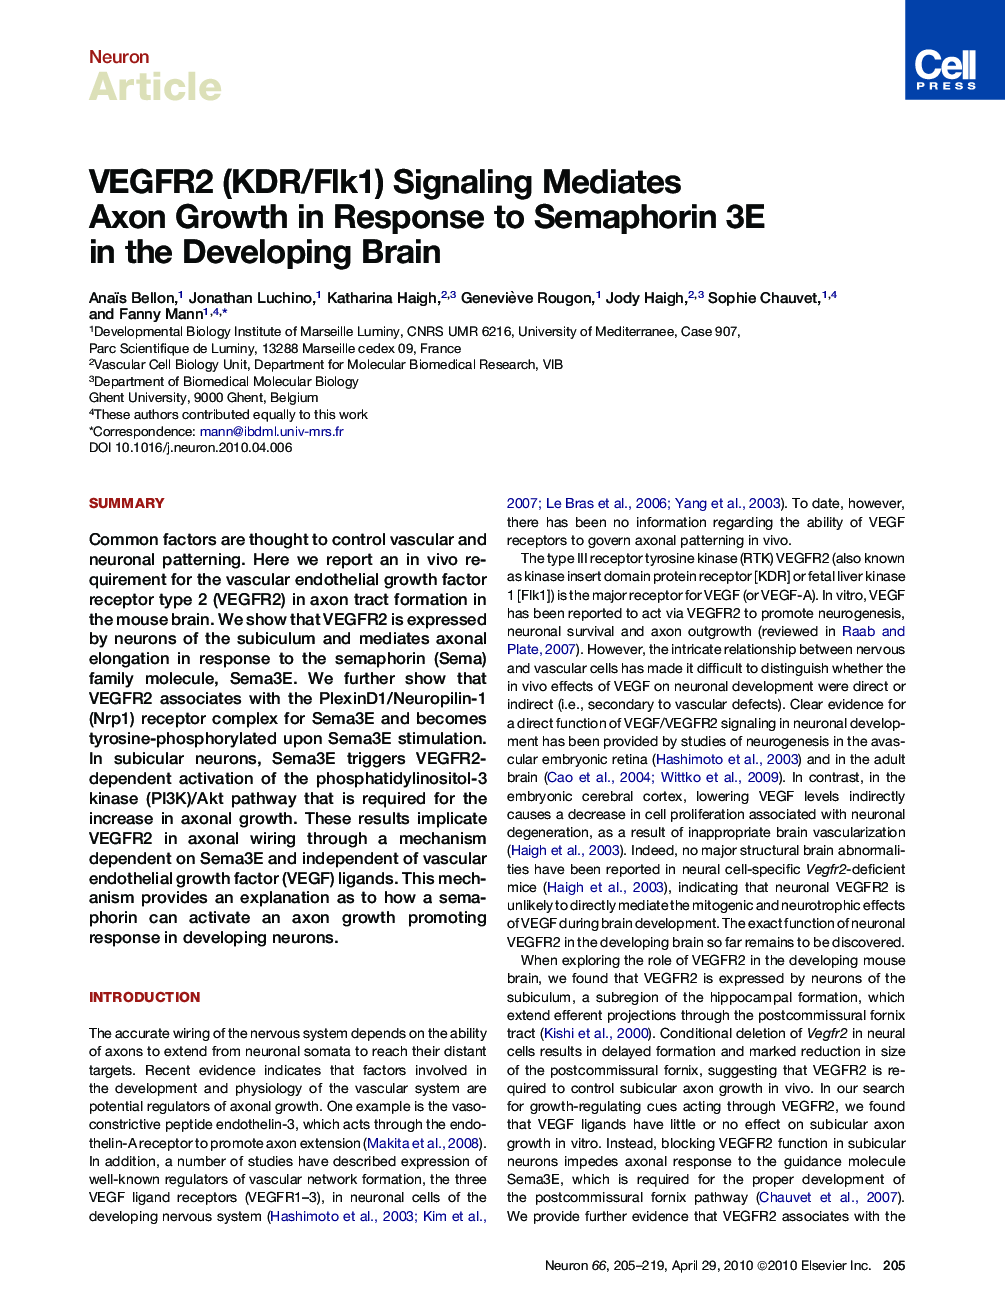 VEGFR2 (KDR/Flk1) Signaling Mediates Axon Growth in Response to Semaphorin 3E in the Developing Brain